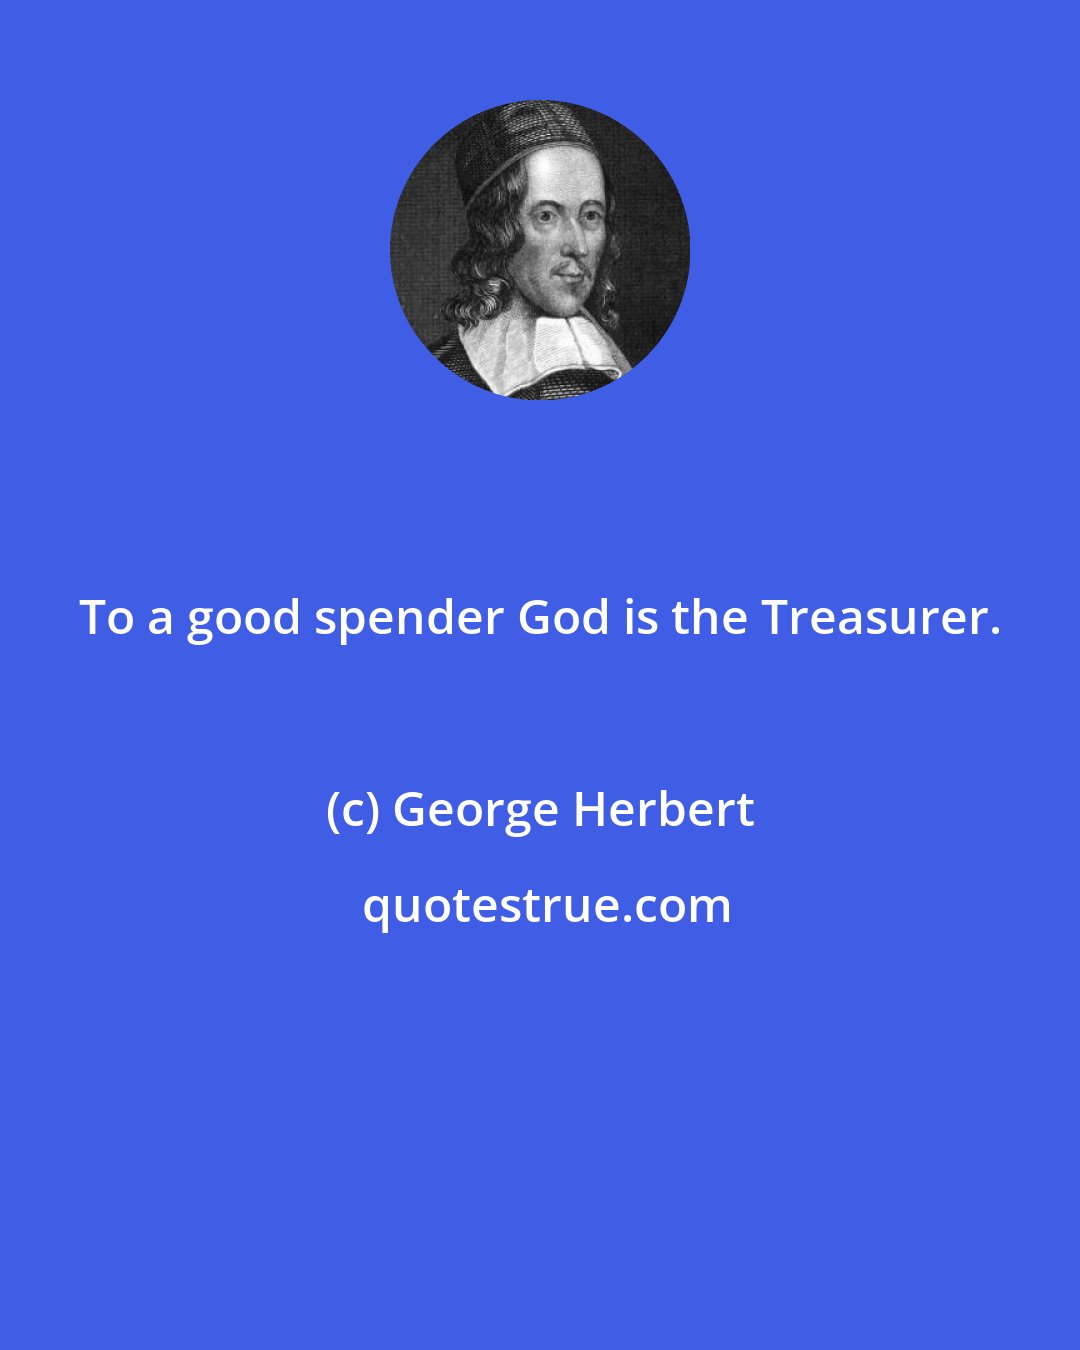 George Herbert: To a good spender God is the Treasurer.